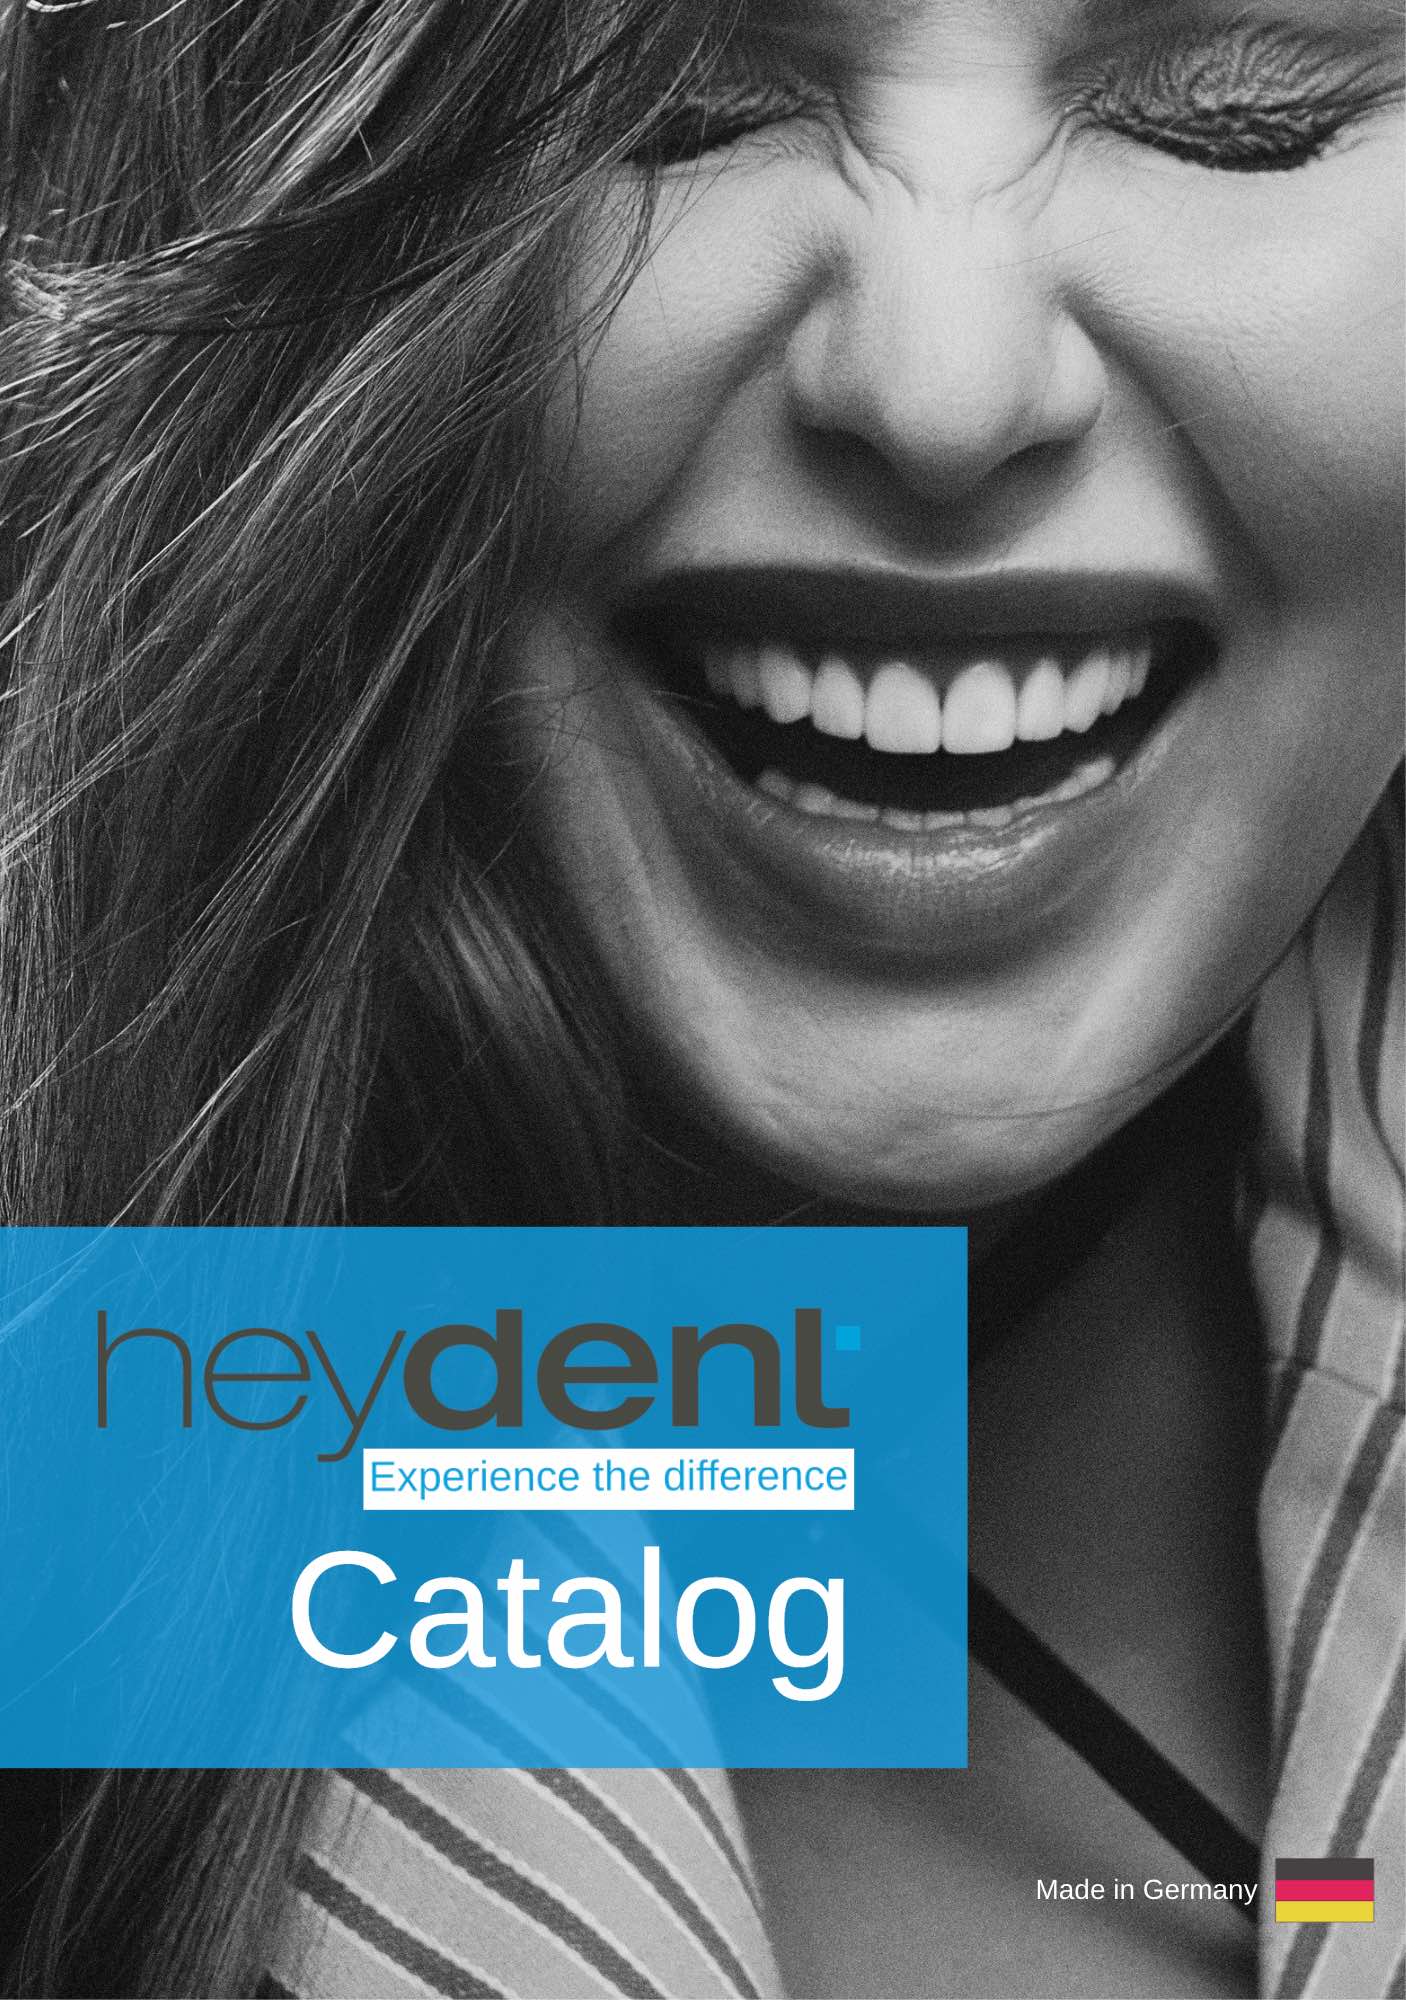 Heydent Catalog